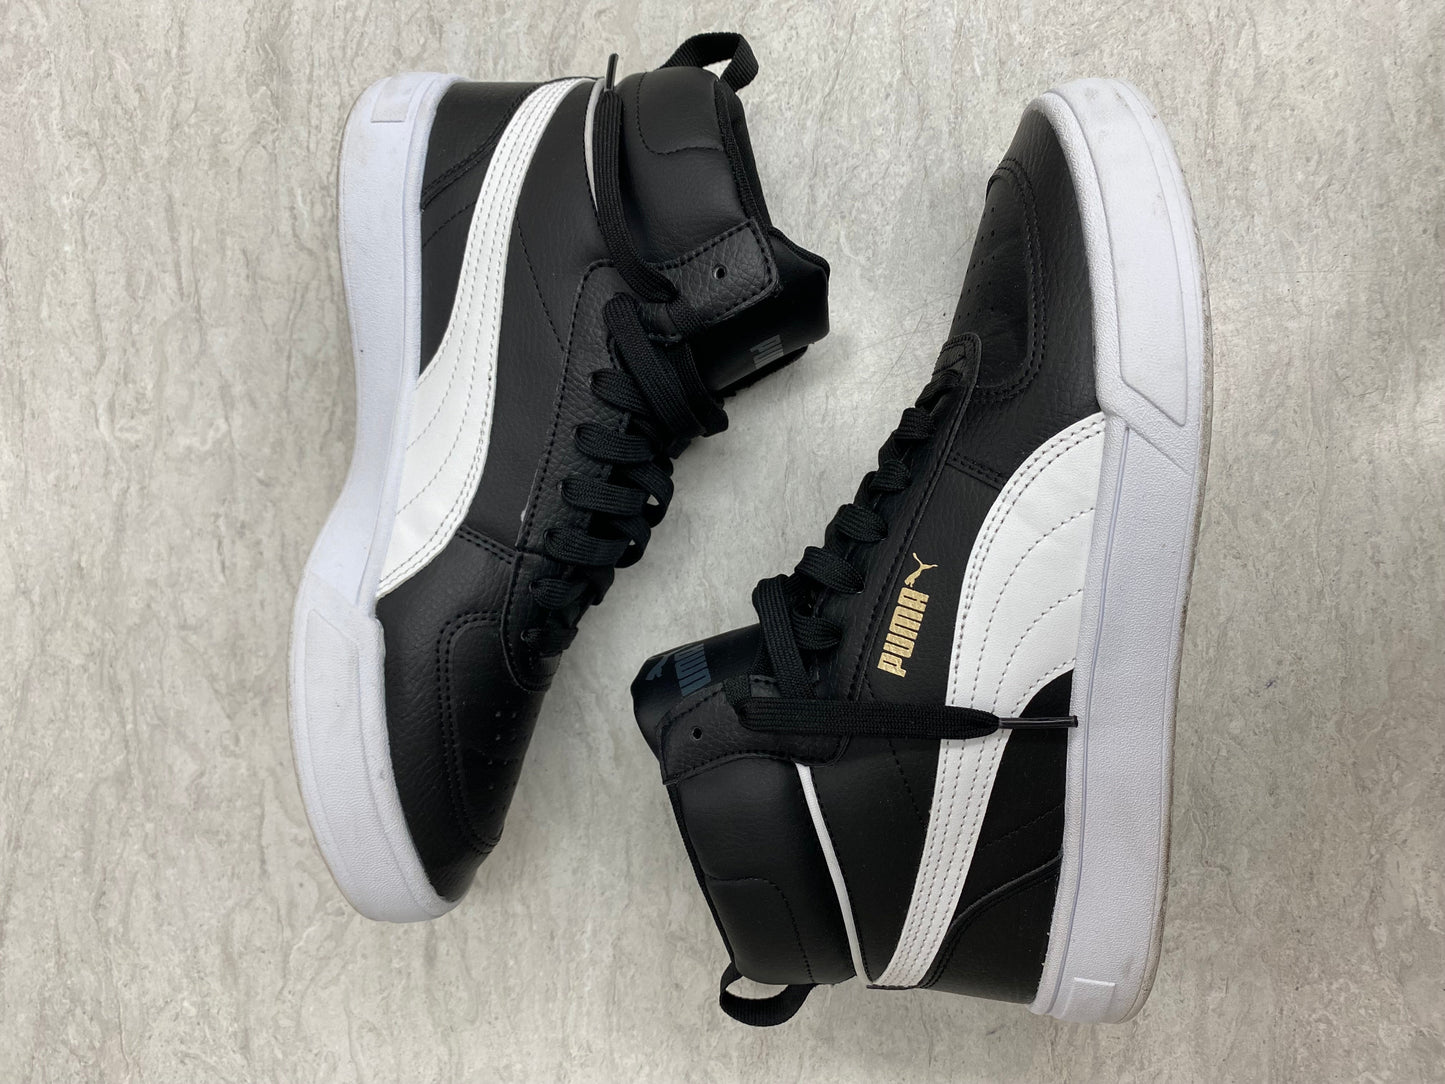 Black & White Shoes Athletic Puma, Size 8.5